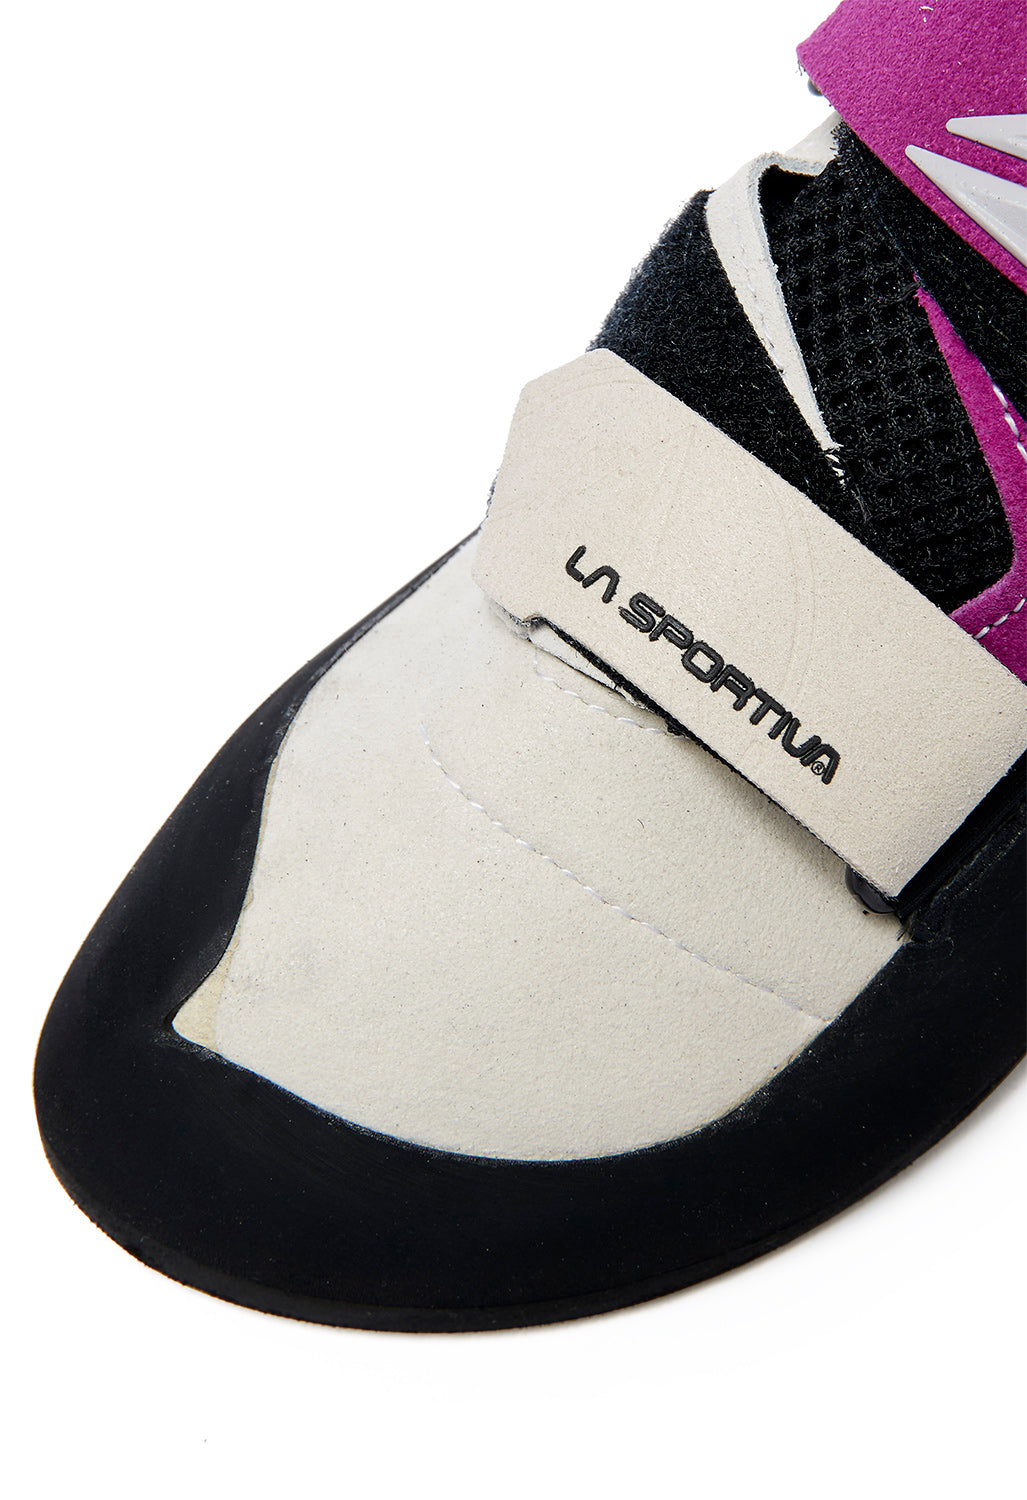 La Sportiva Katana Women's Shoes - Pink/White